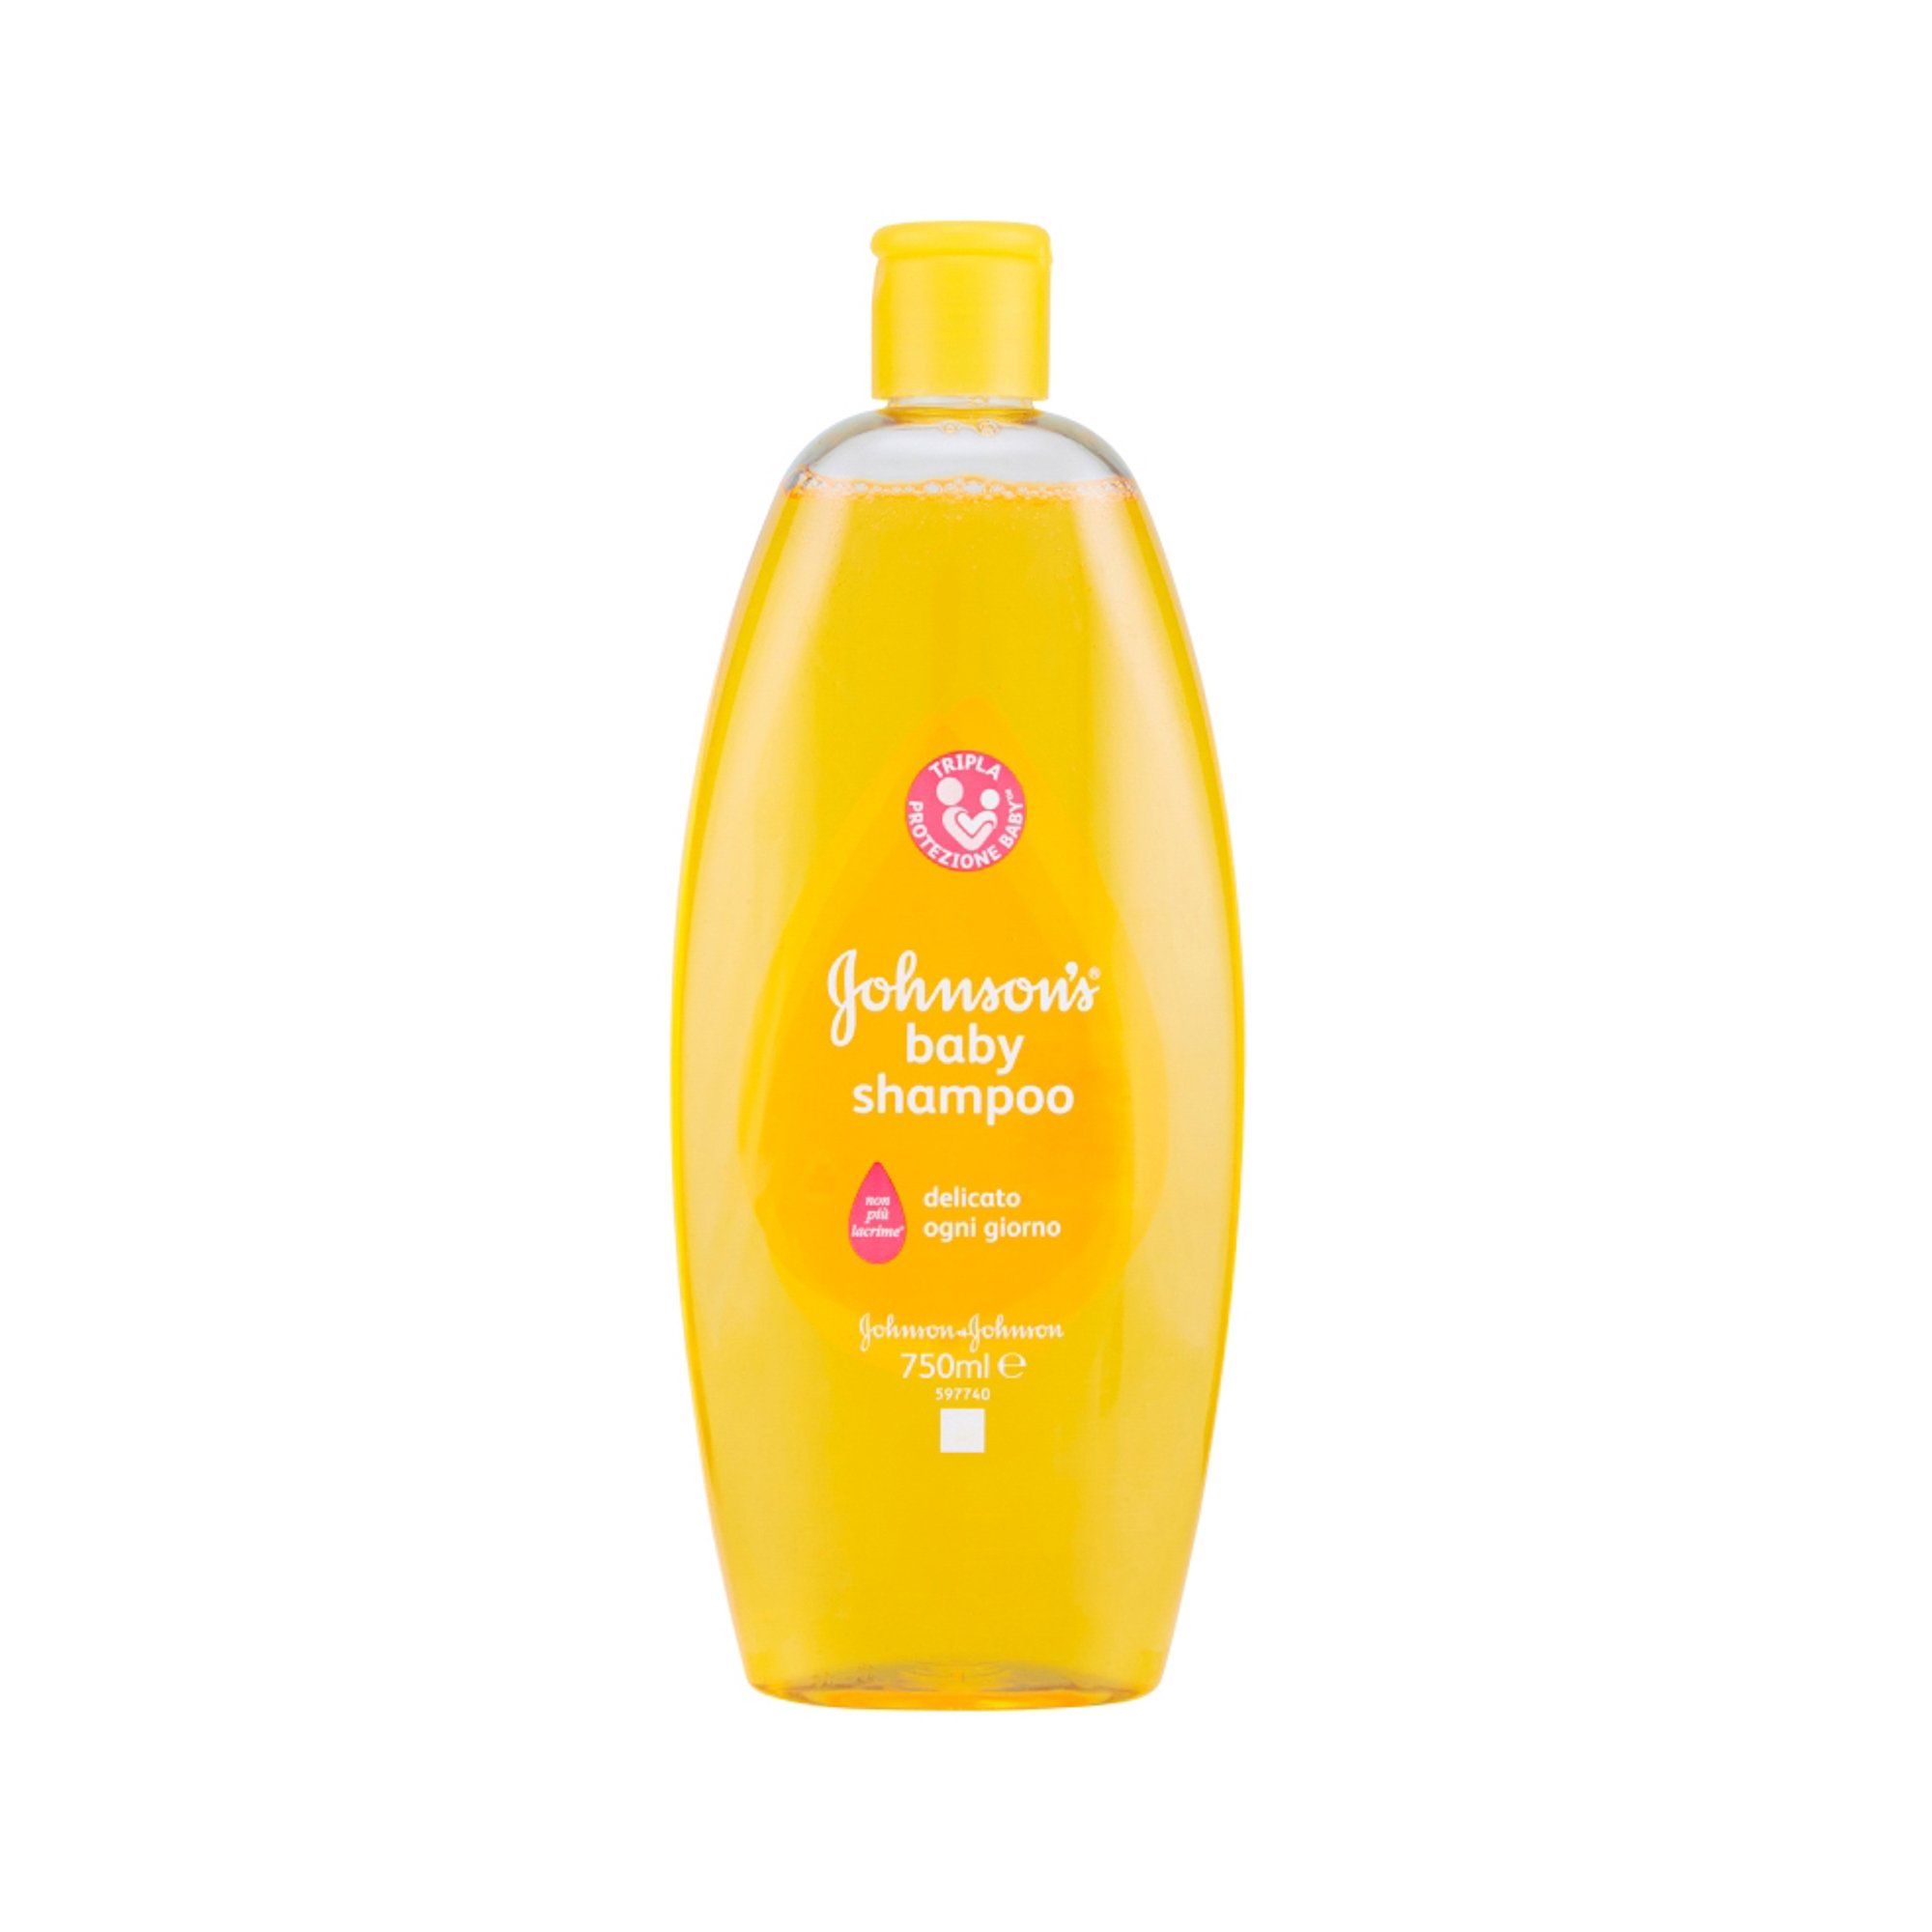 Johnsons baby shampoo classico ml.500